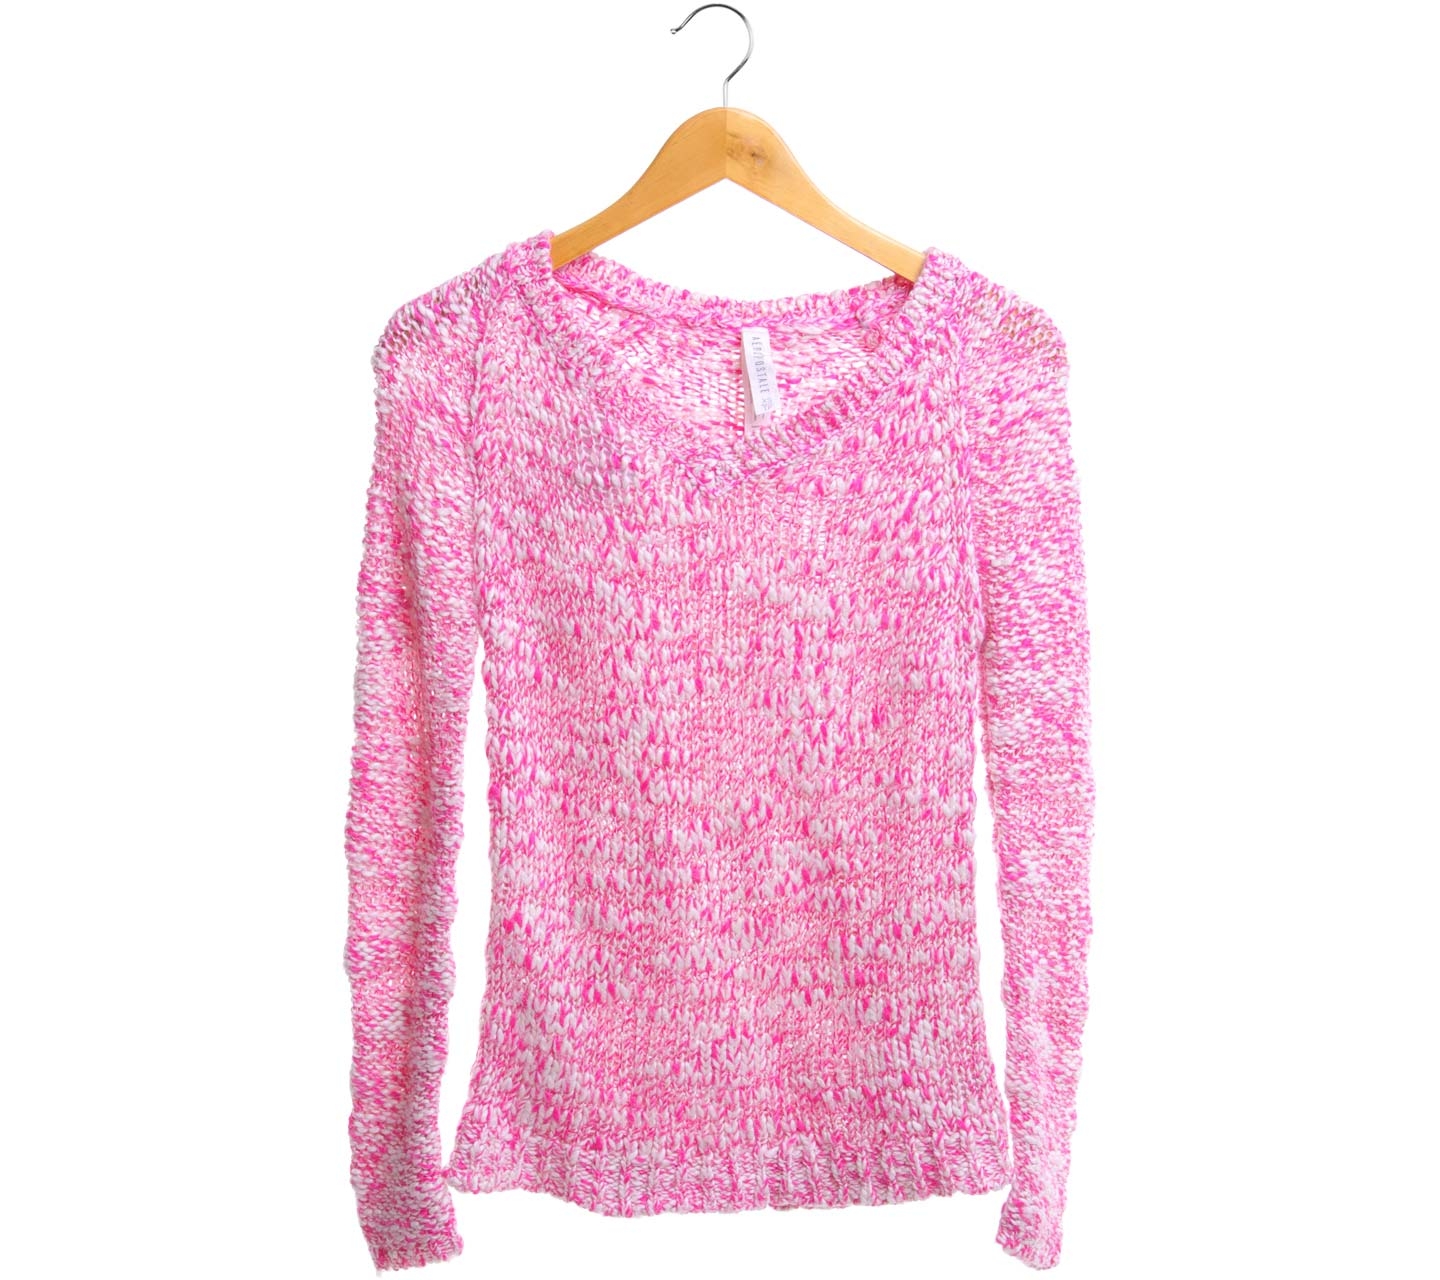 Aeropostale Pink Sweater